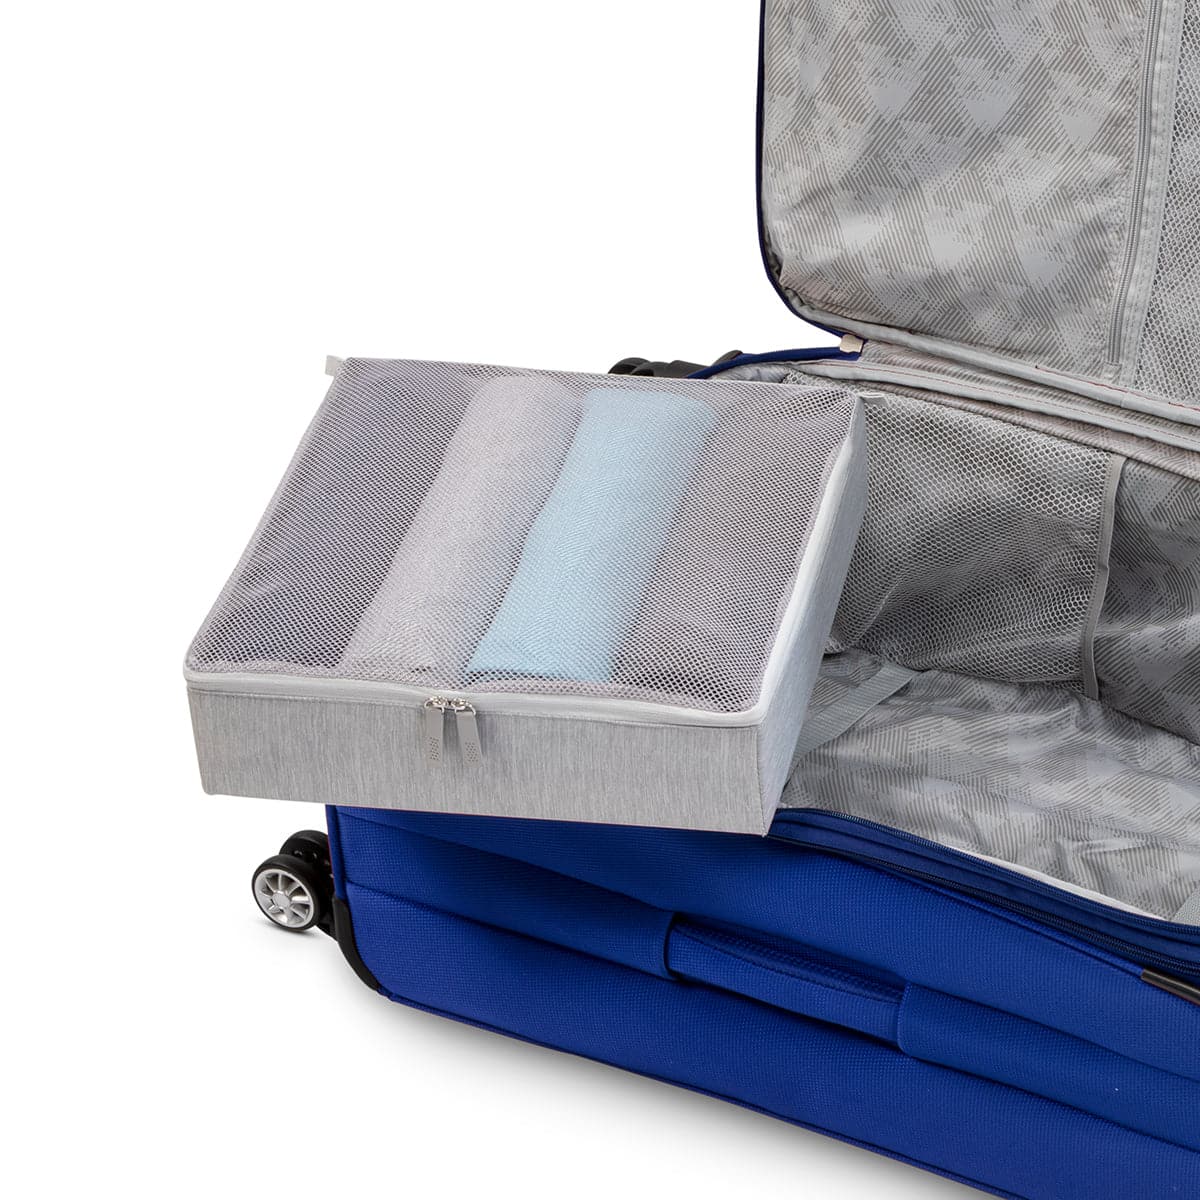 Ricardo Beverly Hills Hermosa Soft Side Medium Check-In Luggage